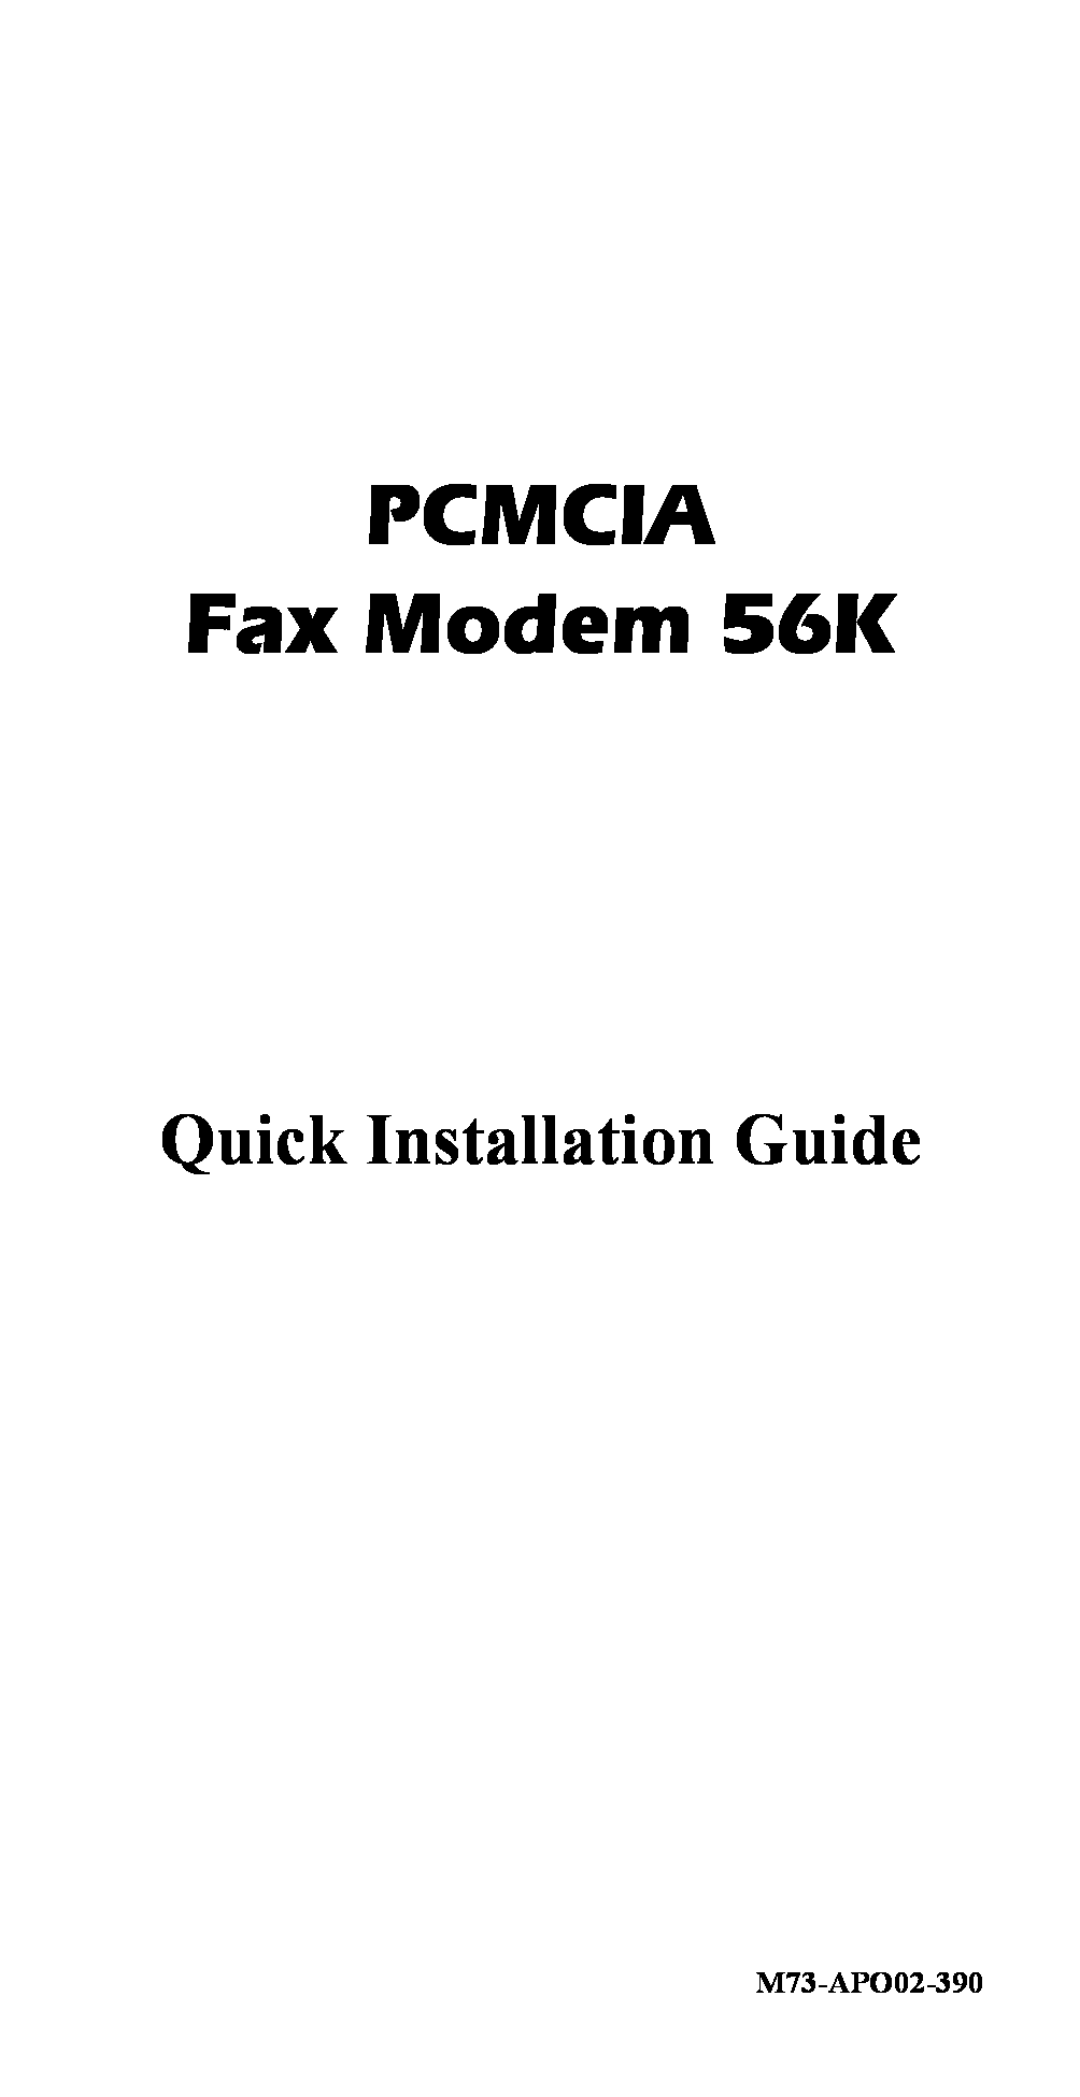 Abocom FM560C manual PCMCIA Fax Modem 56K, Quick Installation Guide, M73-APO02-390 